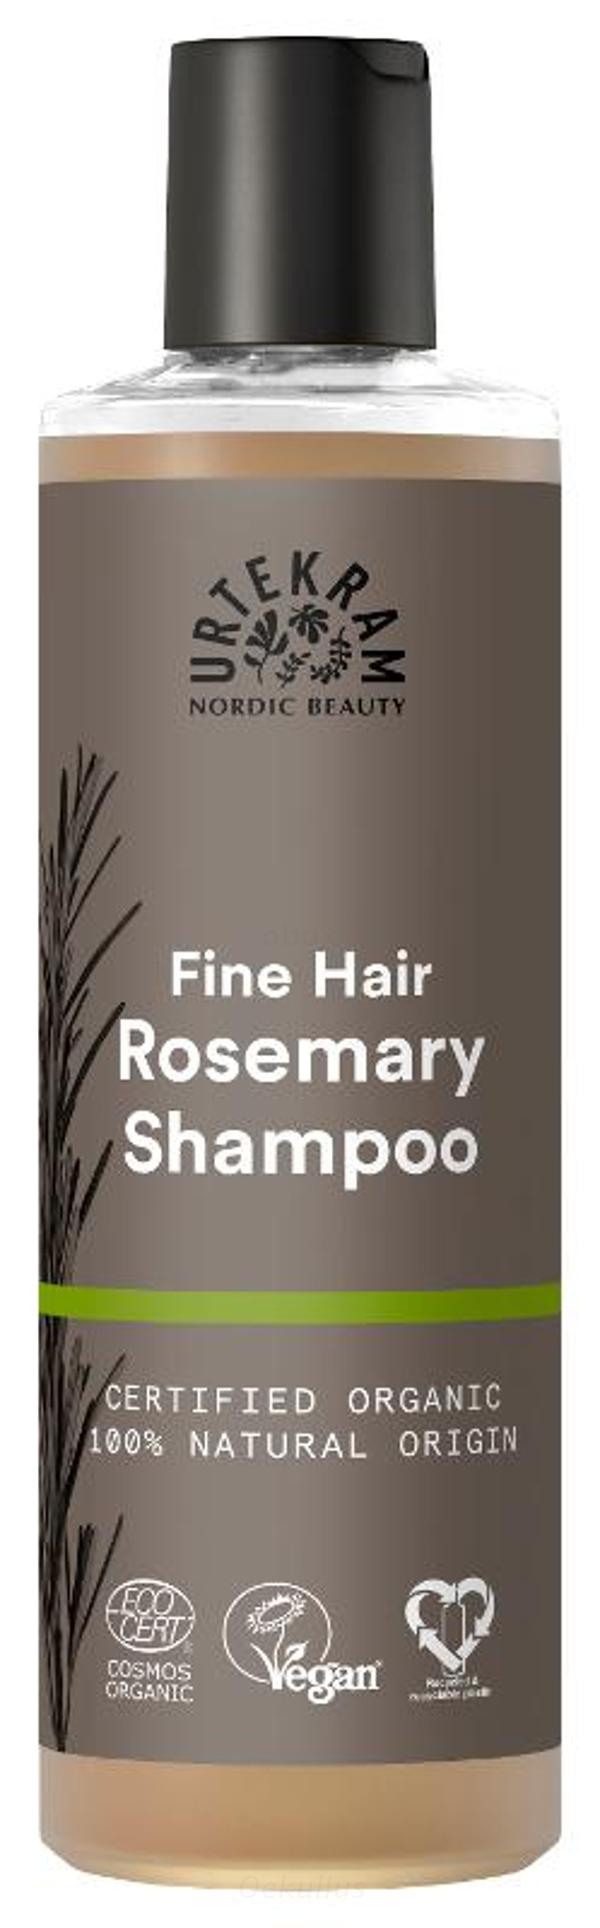 Produktfoto zu Rosmarin Shampoo